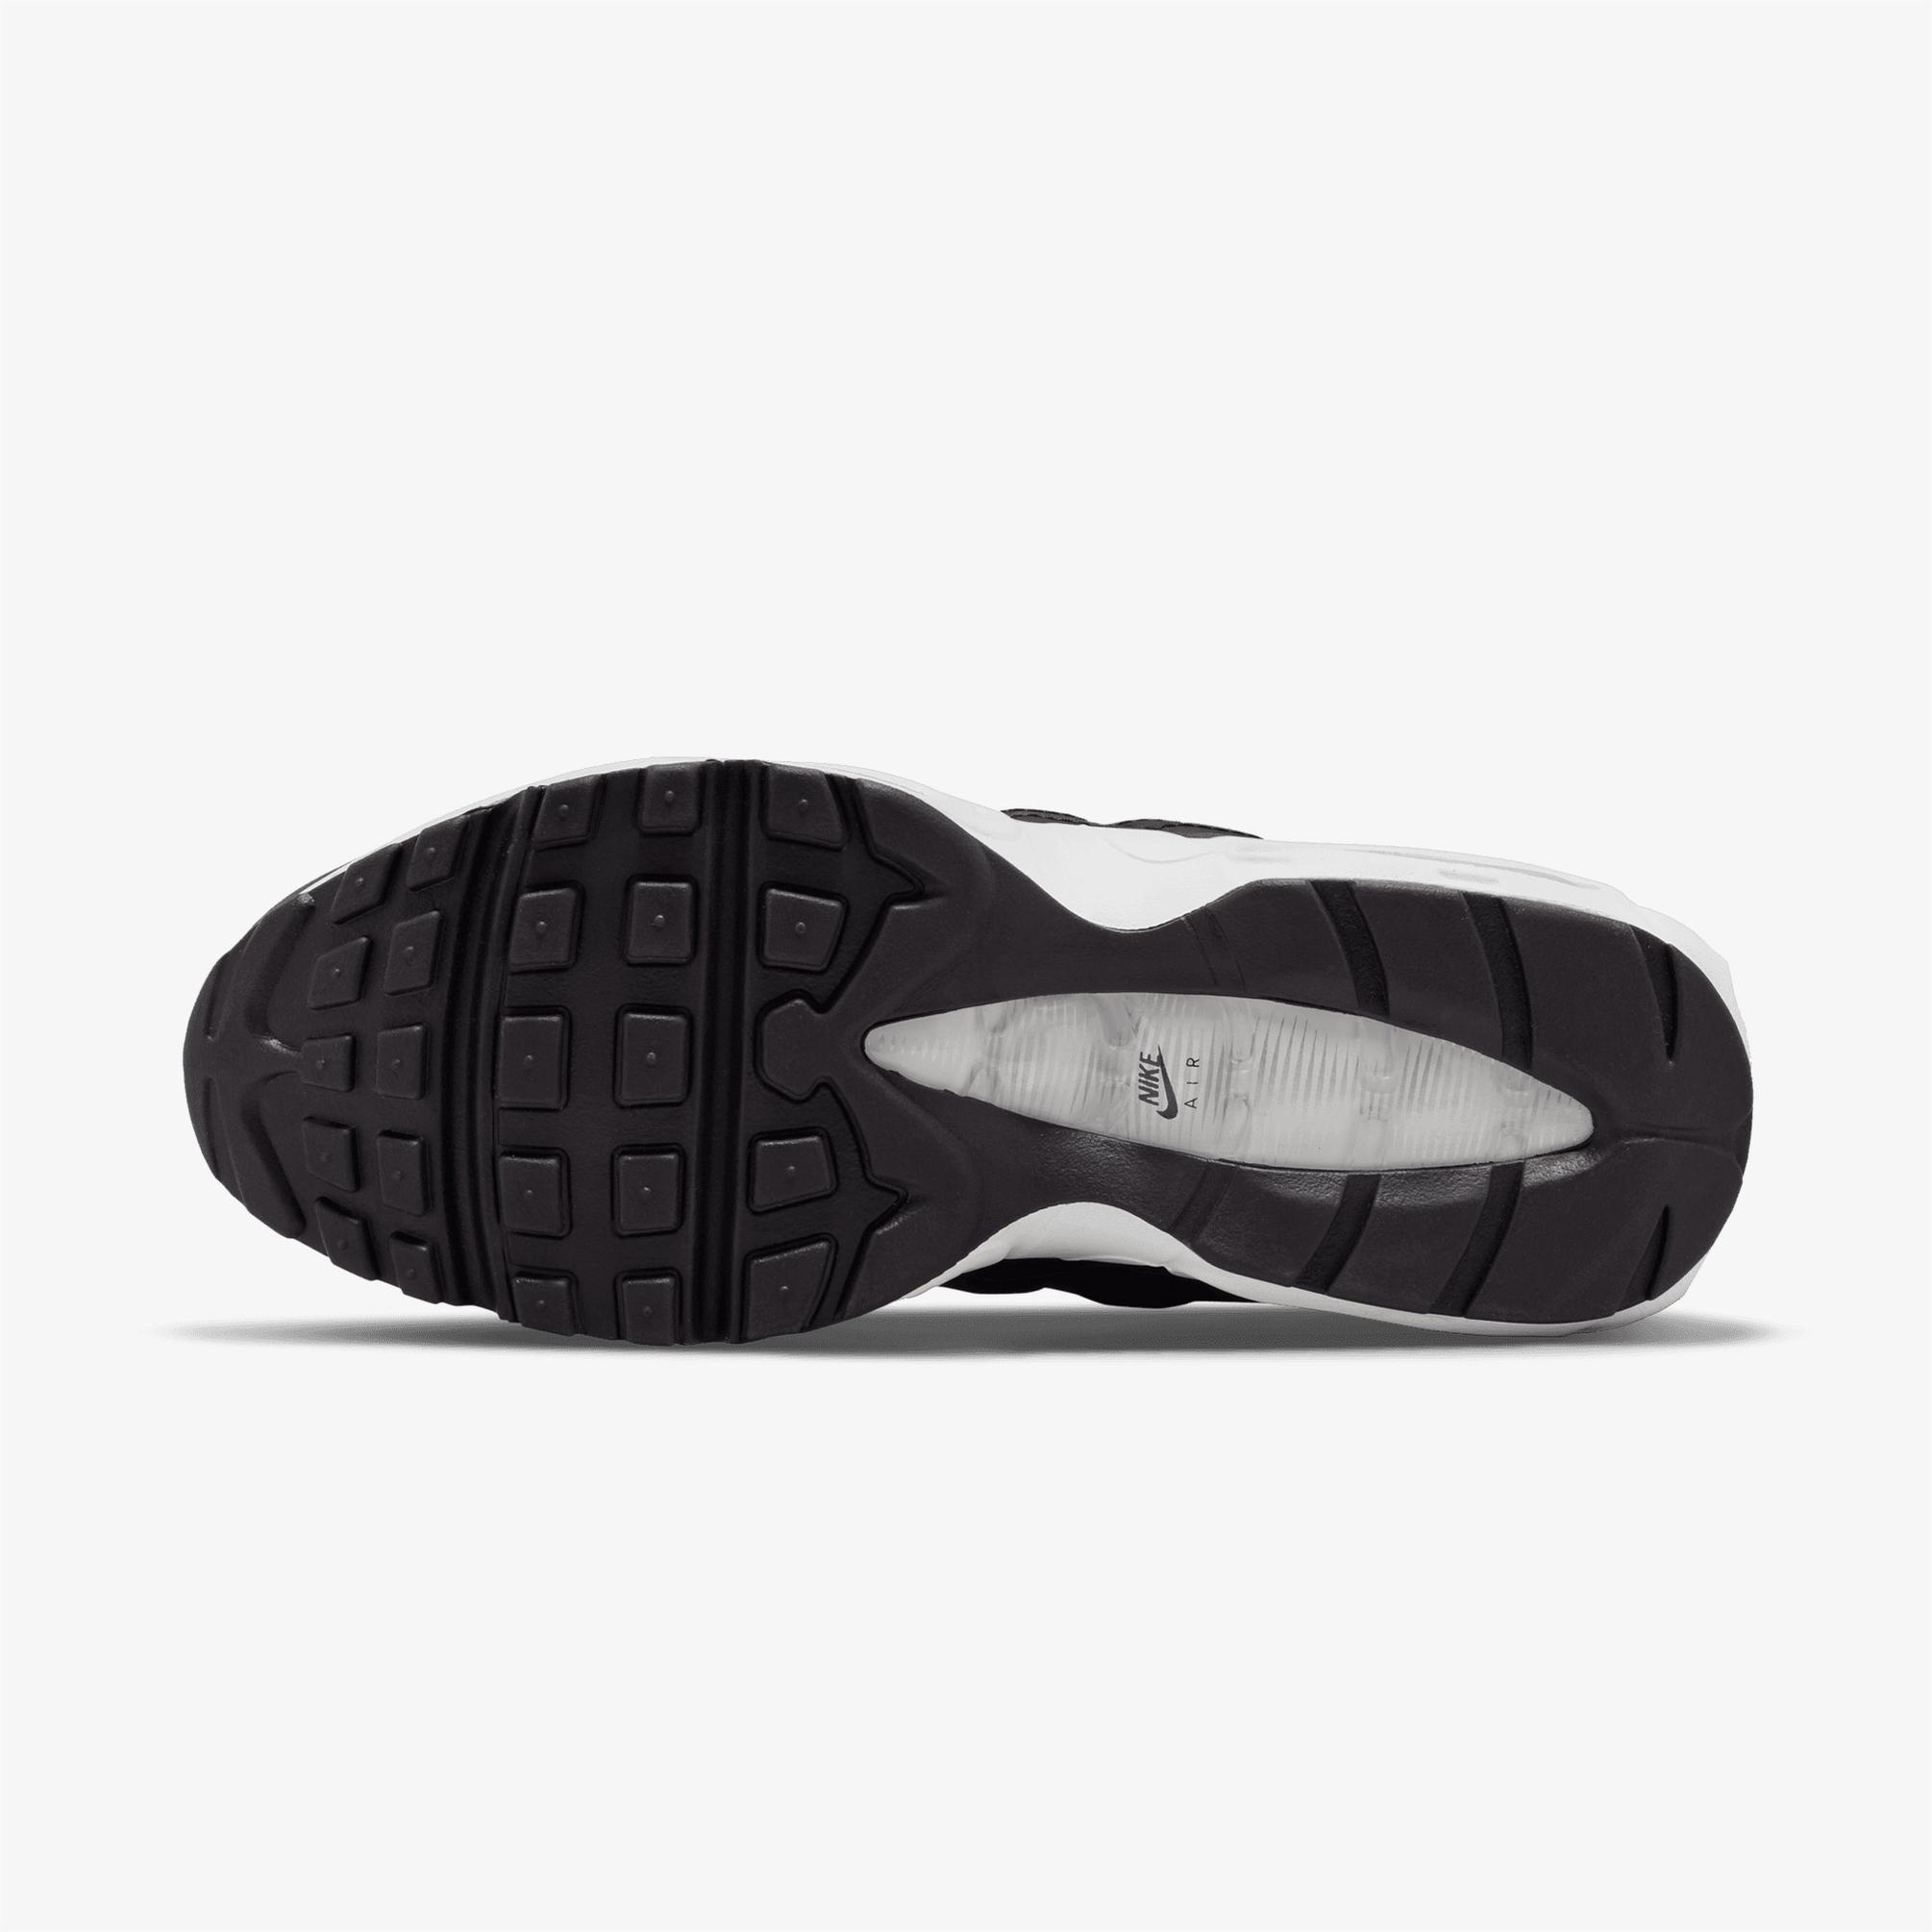  Nike Air Max 95 Kadın Siyah Spor Ayakkabı